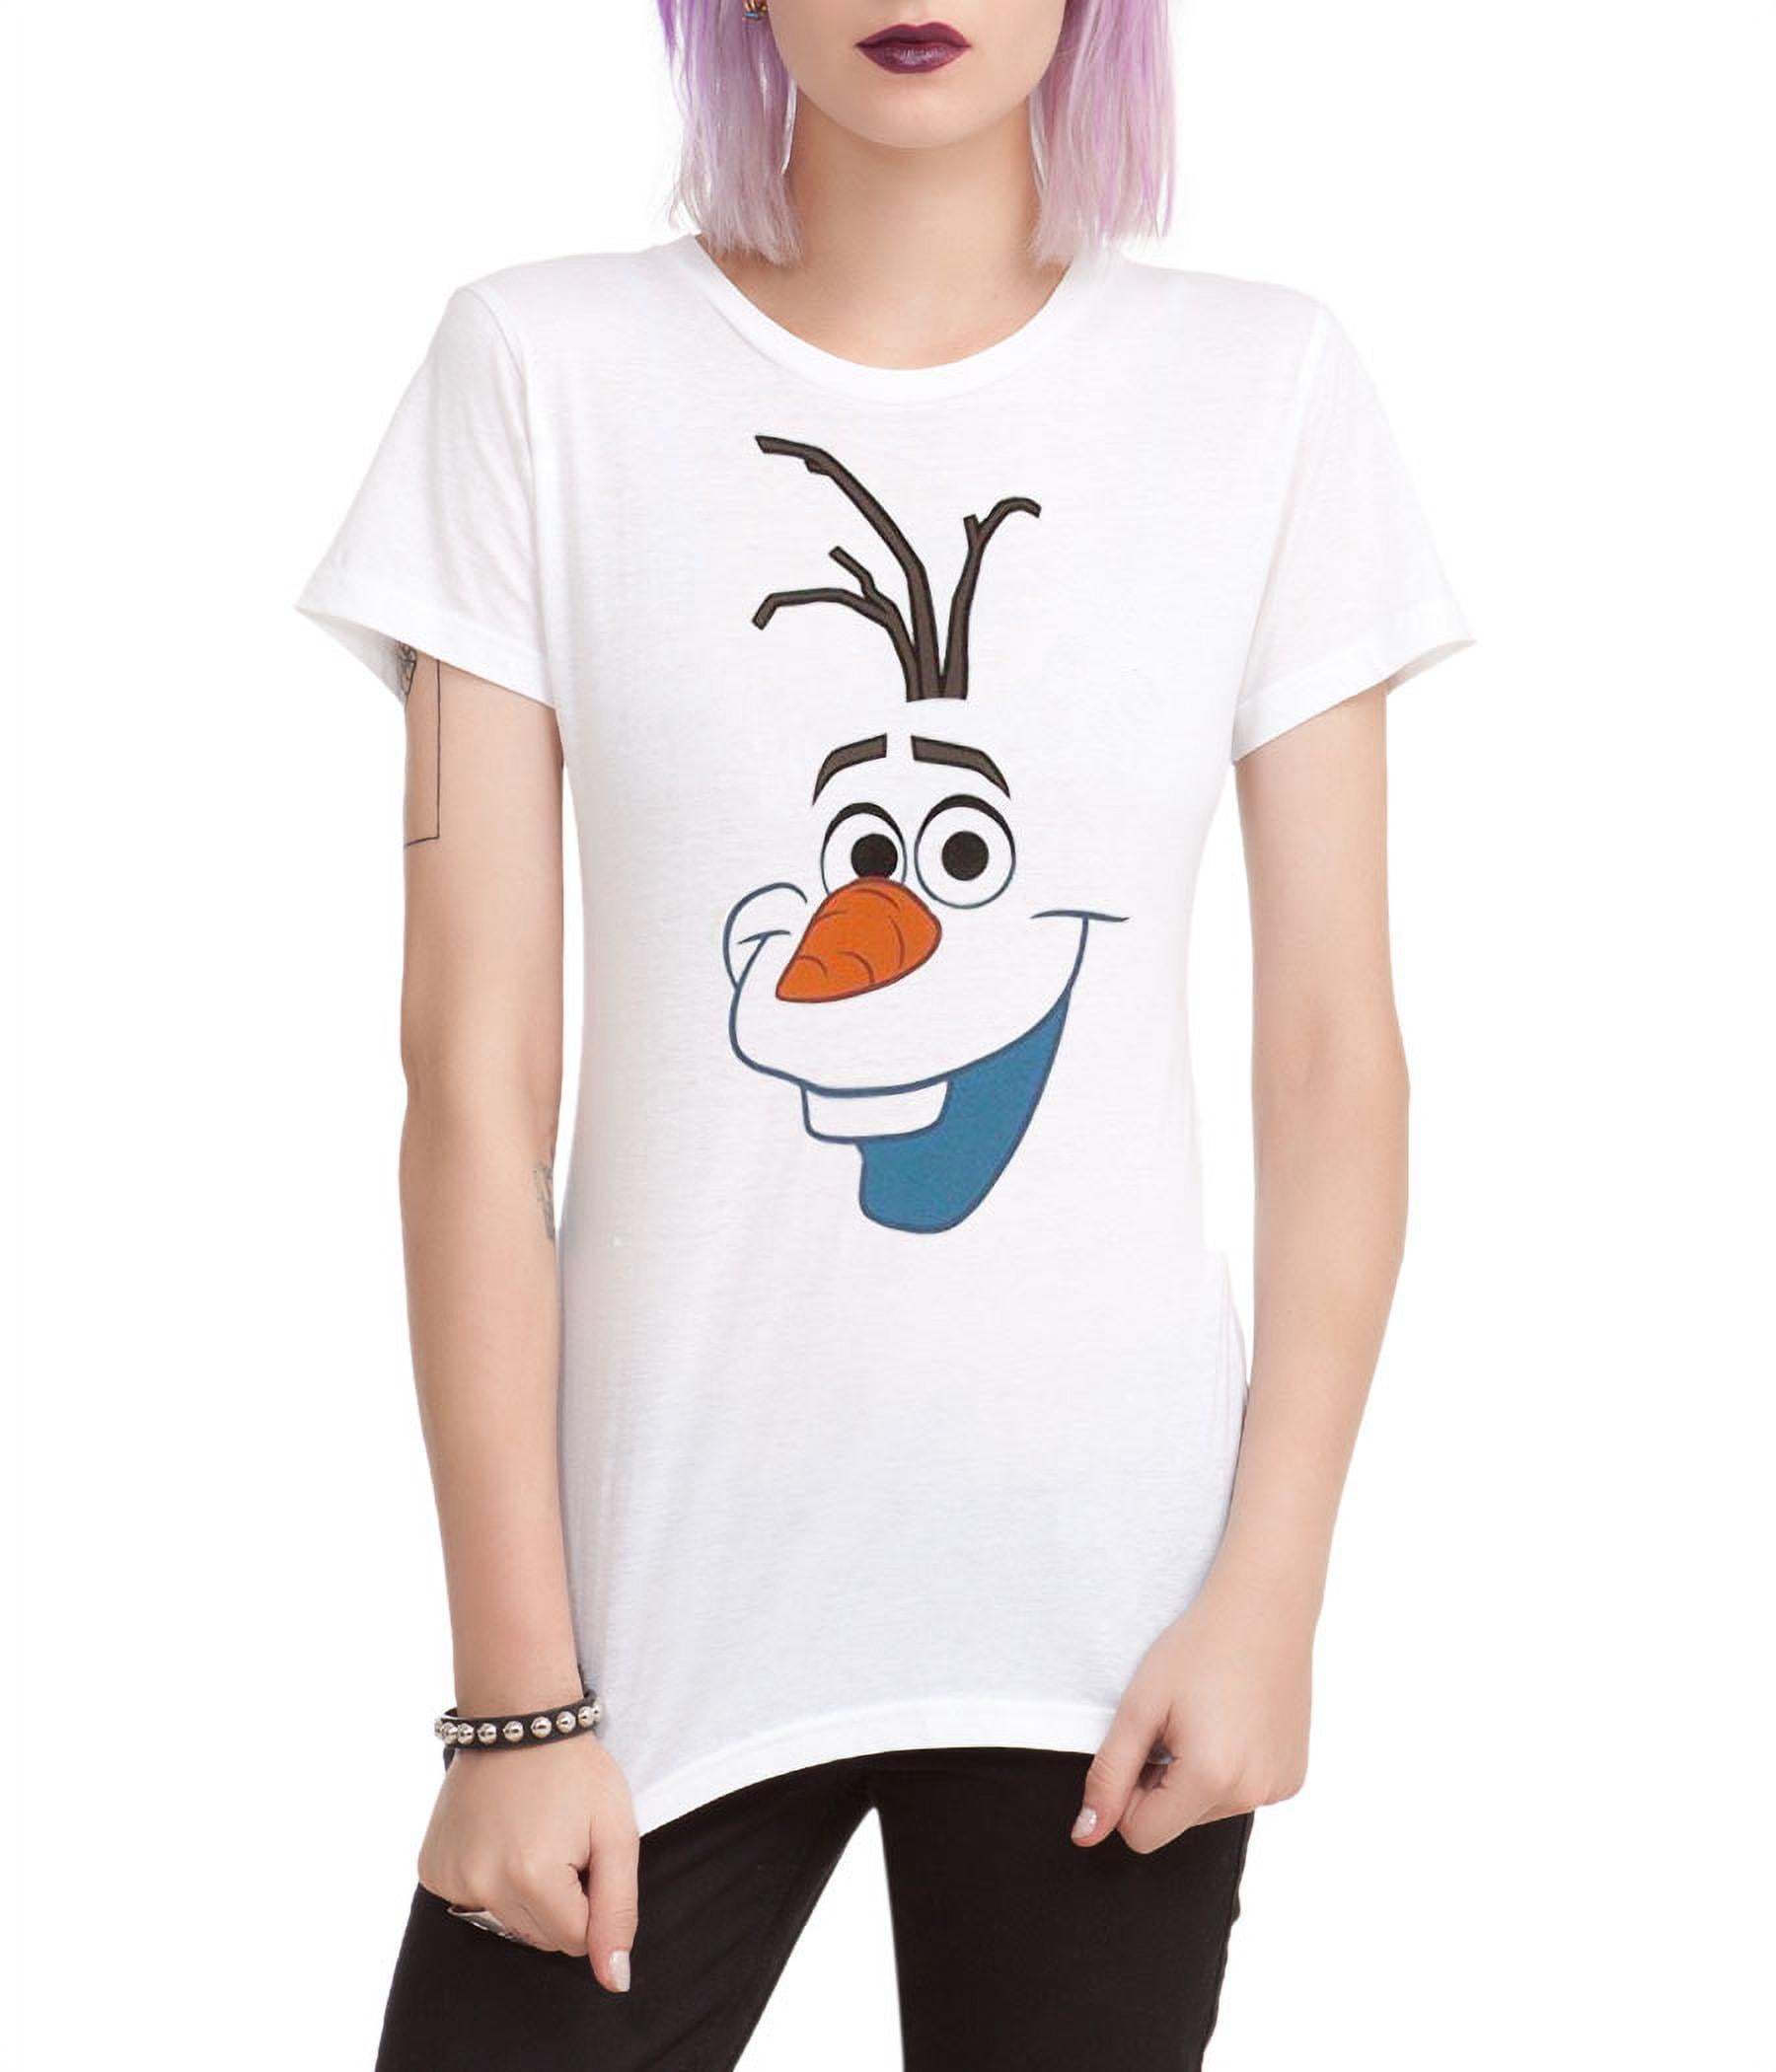 Frozen Olaf Smiley Face Junior -